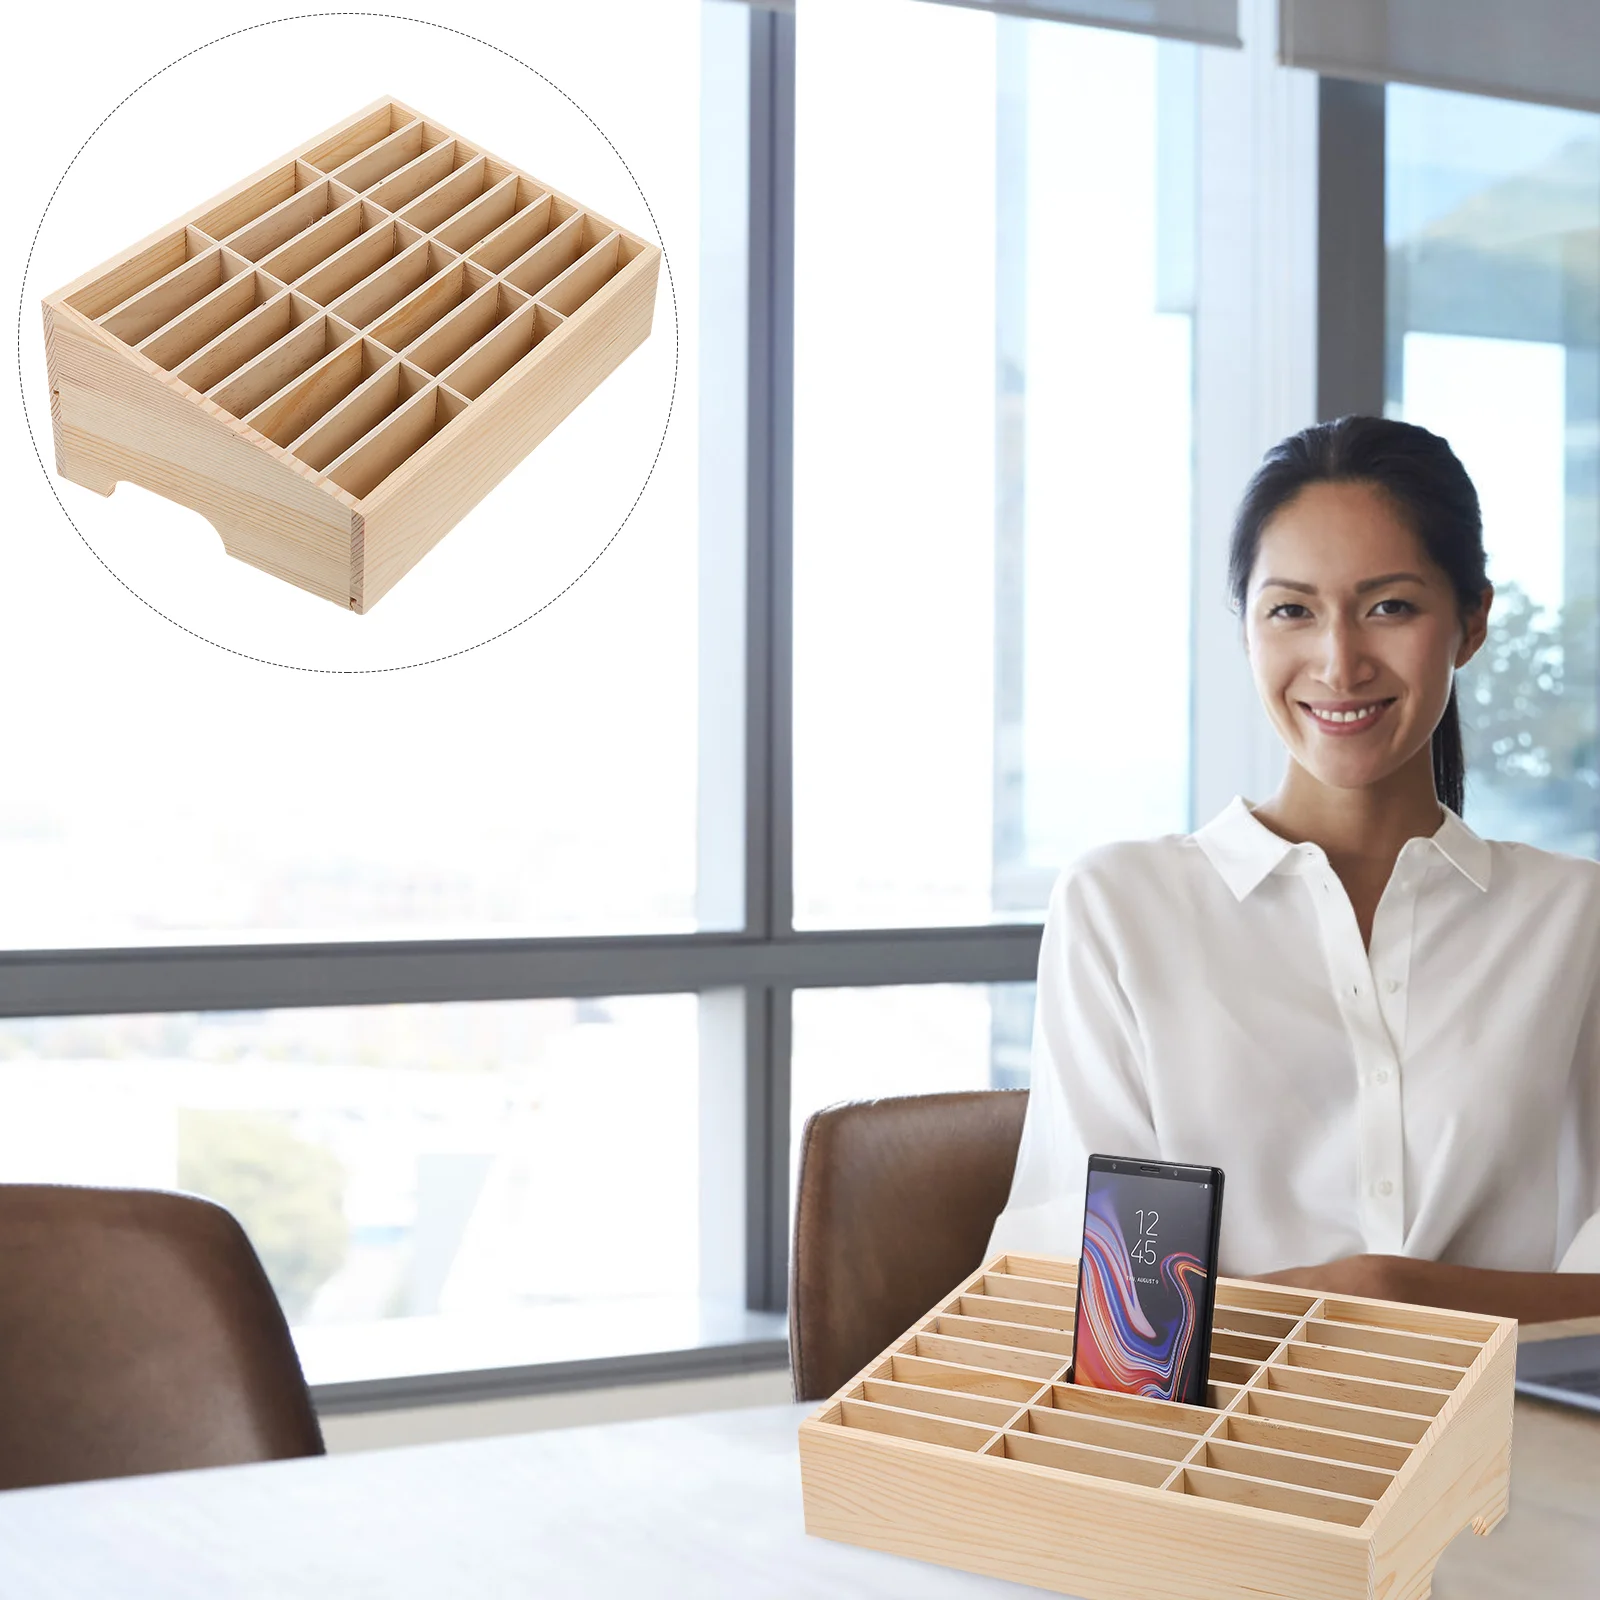 

Box Storage Cell Organizer Wooden Desktop Mobile Holder Rack Multi Display Grid Meeting Management Classroom Roomcase Desk Bins